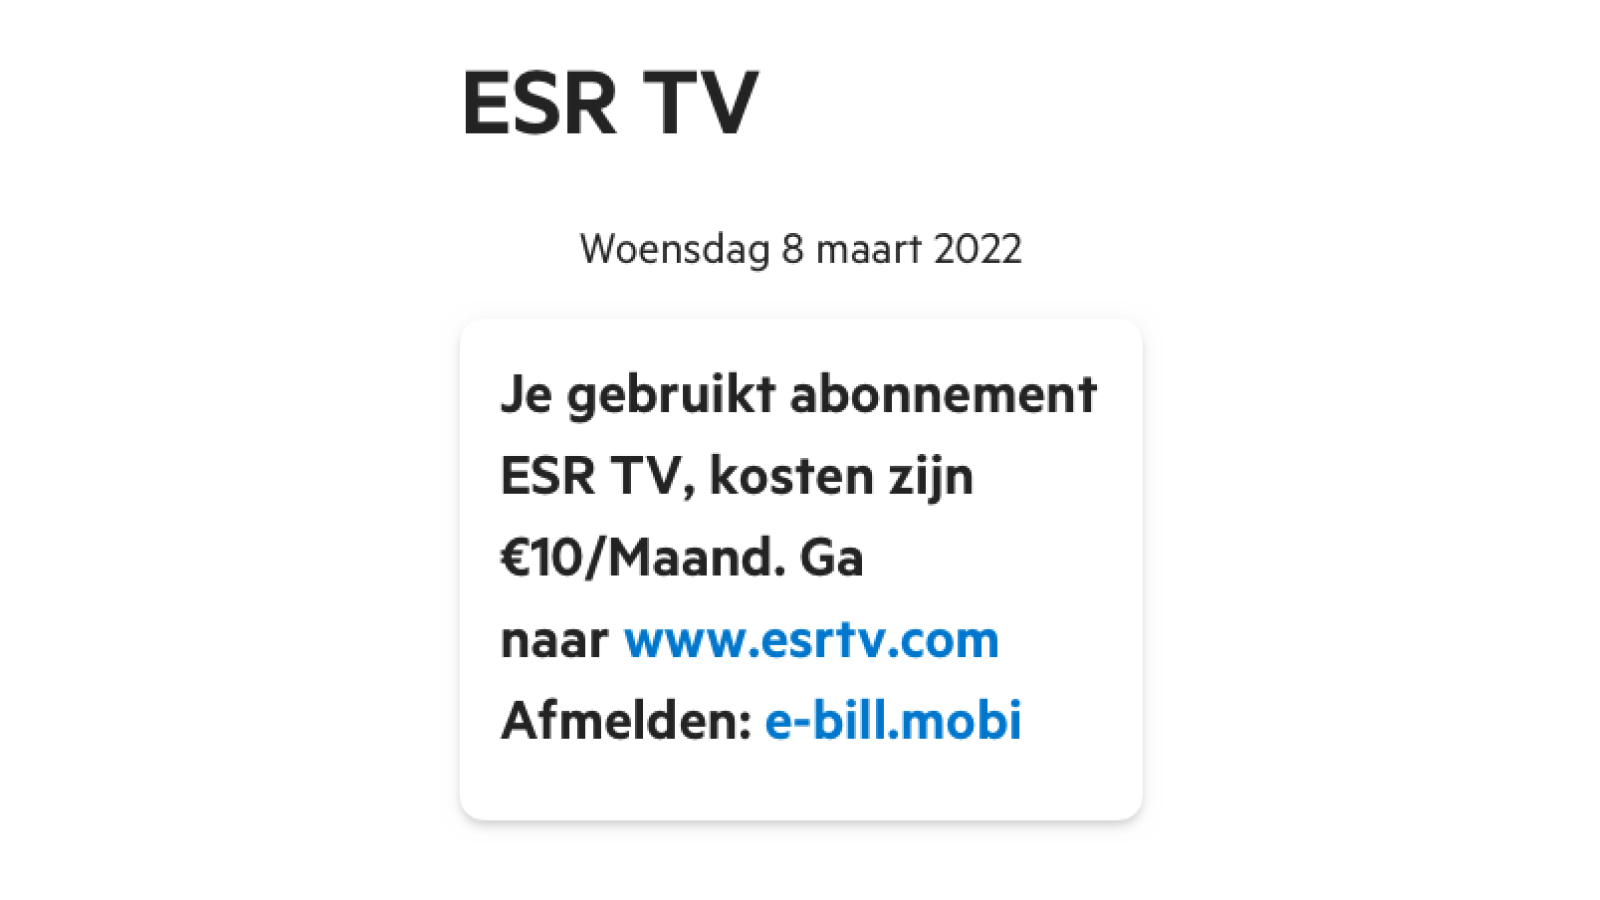 Voorbeeld ESR TV via e-bill.mobi